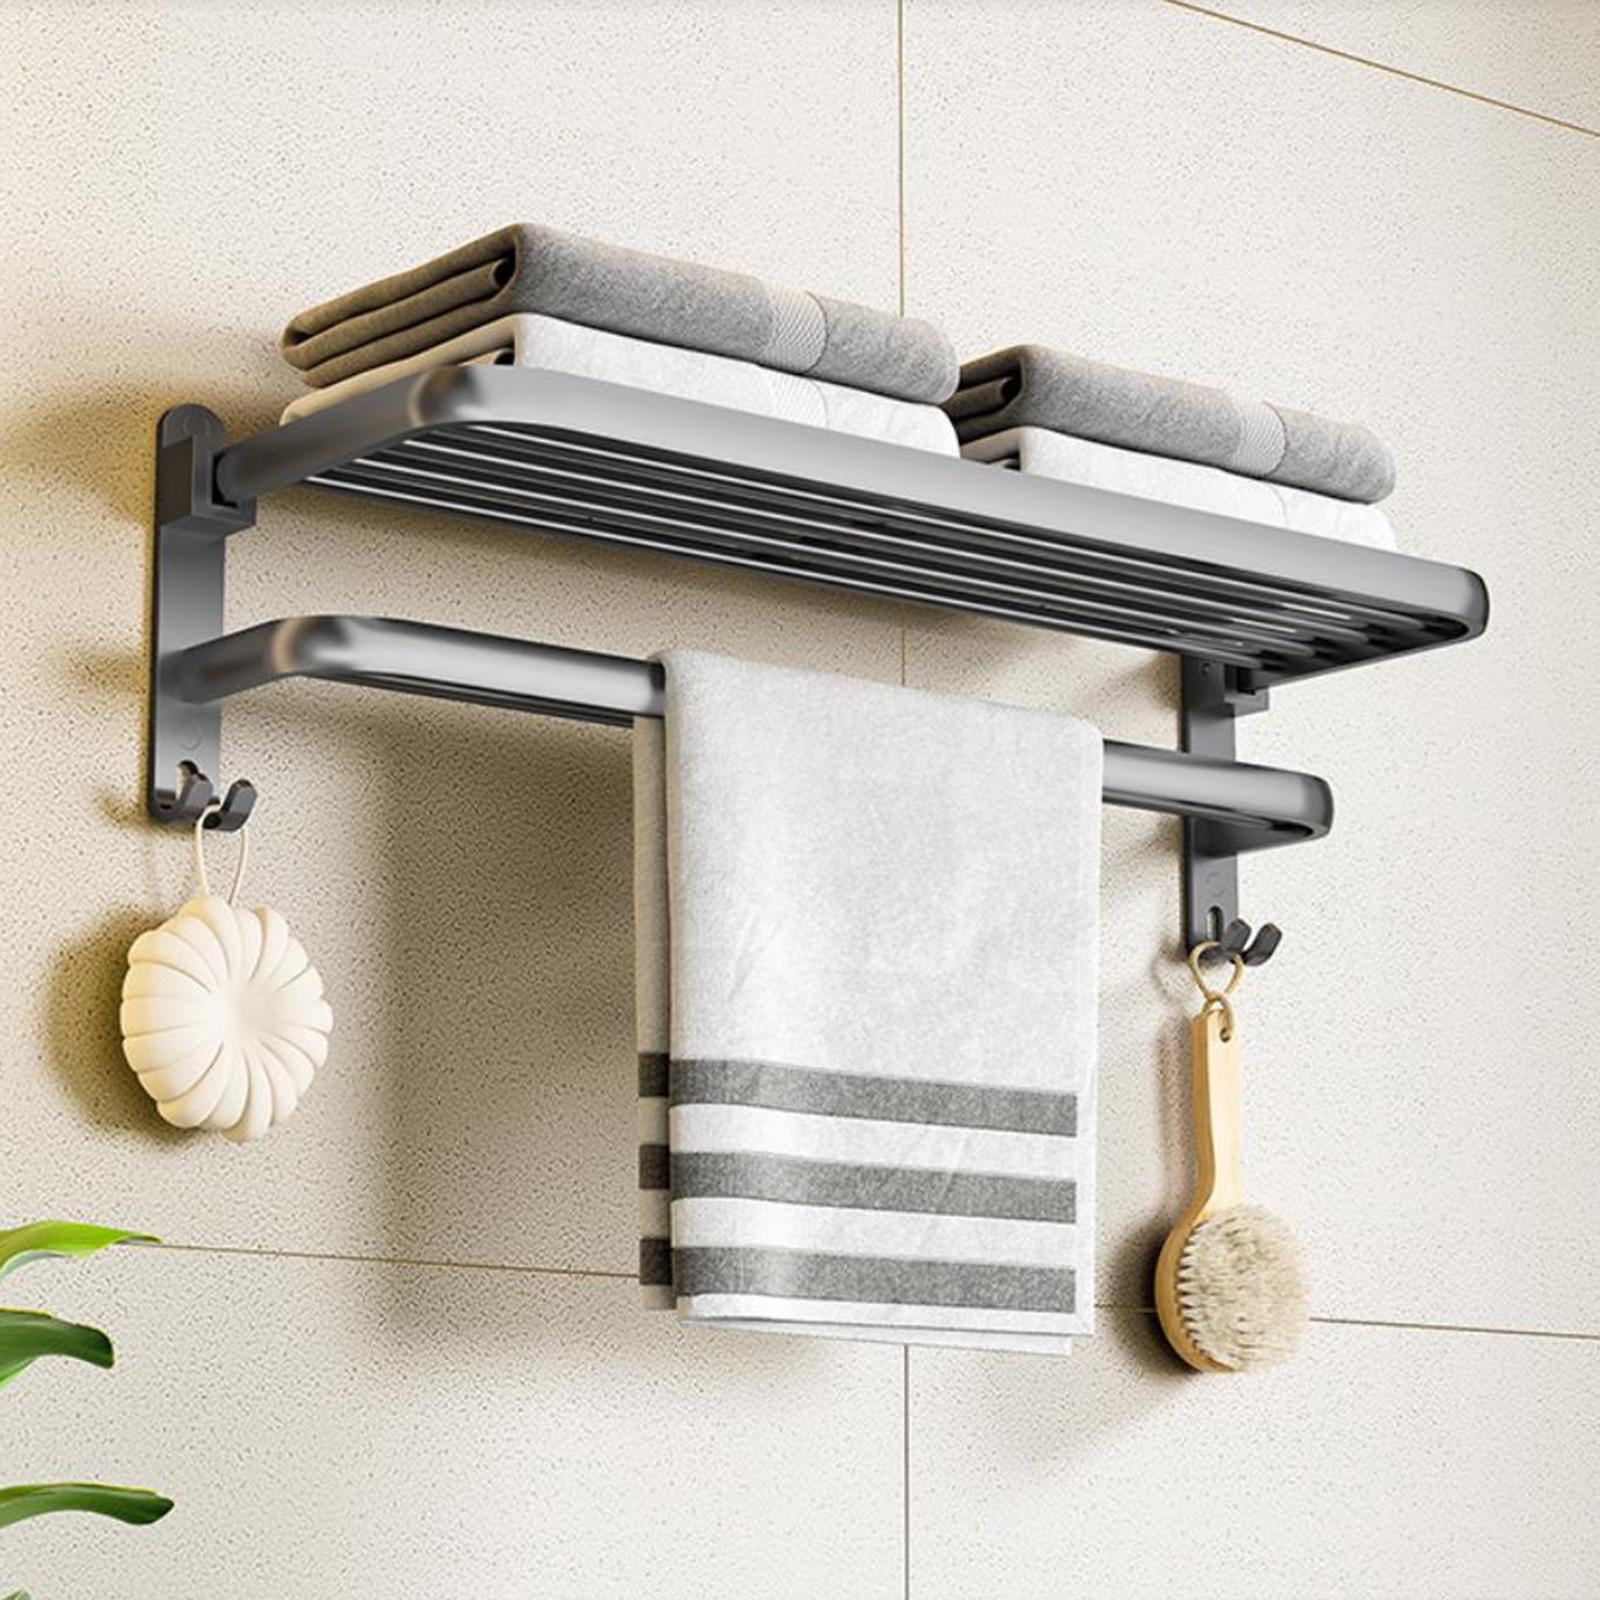 LELUXE Bathroom Towel Rack Shelves - SUS304 Stainless Steel Rustproof with  Double Towel Bar & 5 Hooks, Shower Room Organizer, Shelf Holder, Bathroom